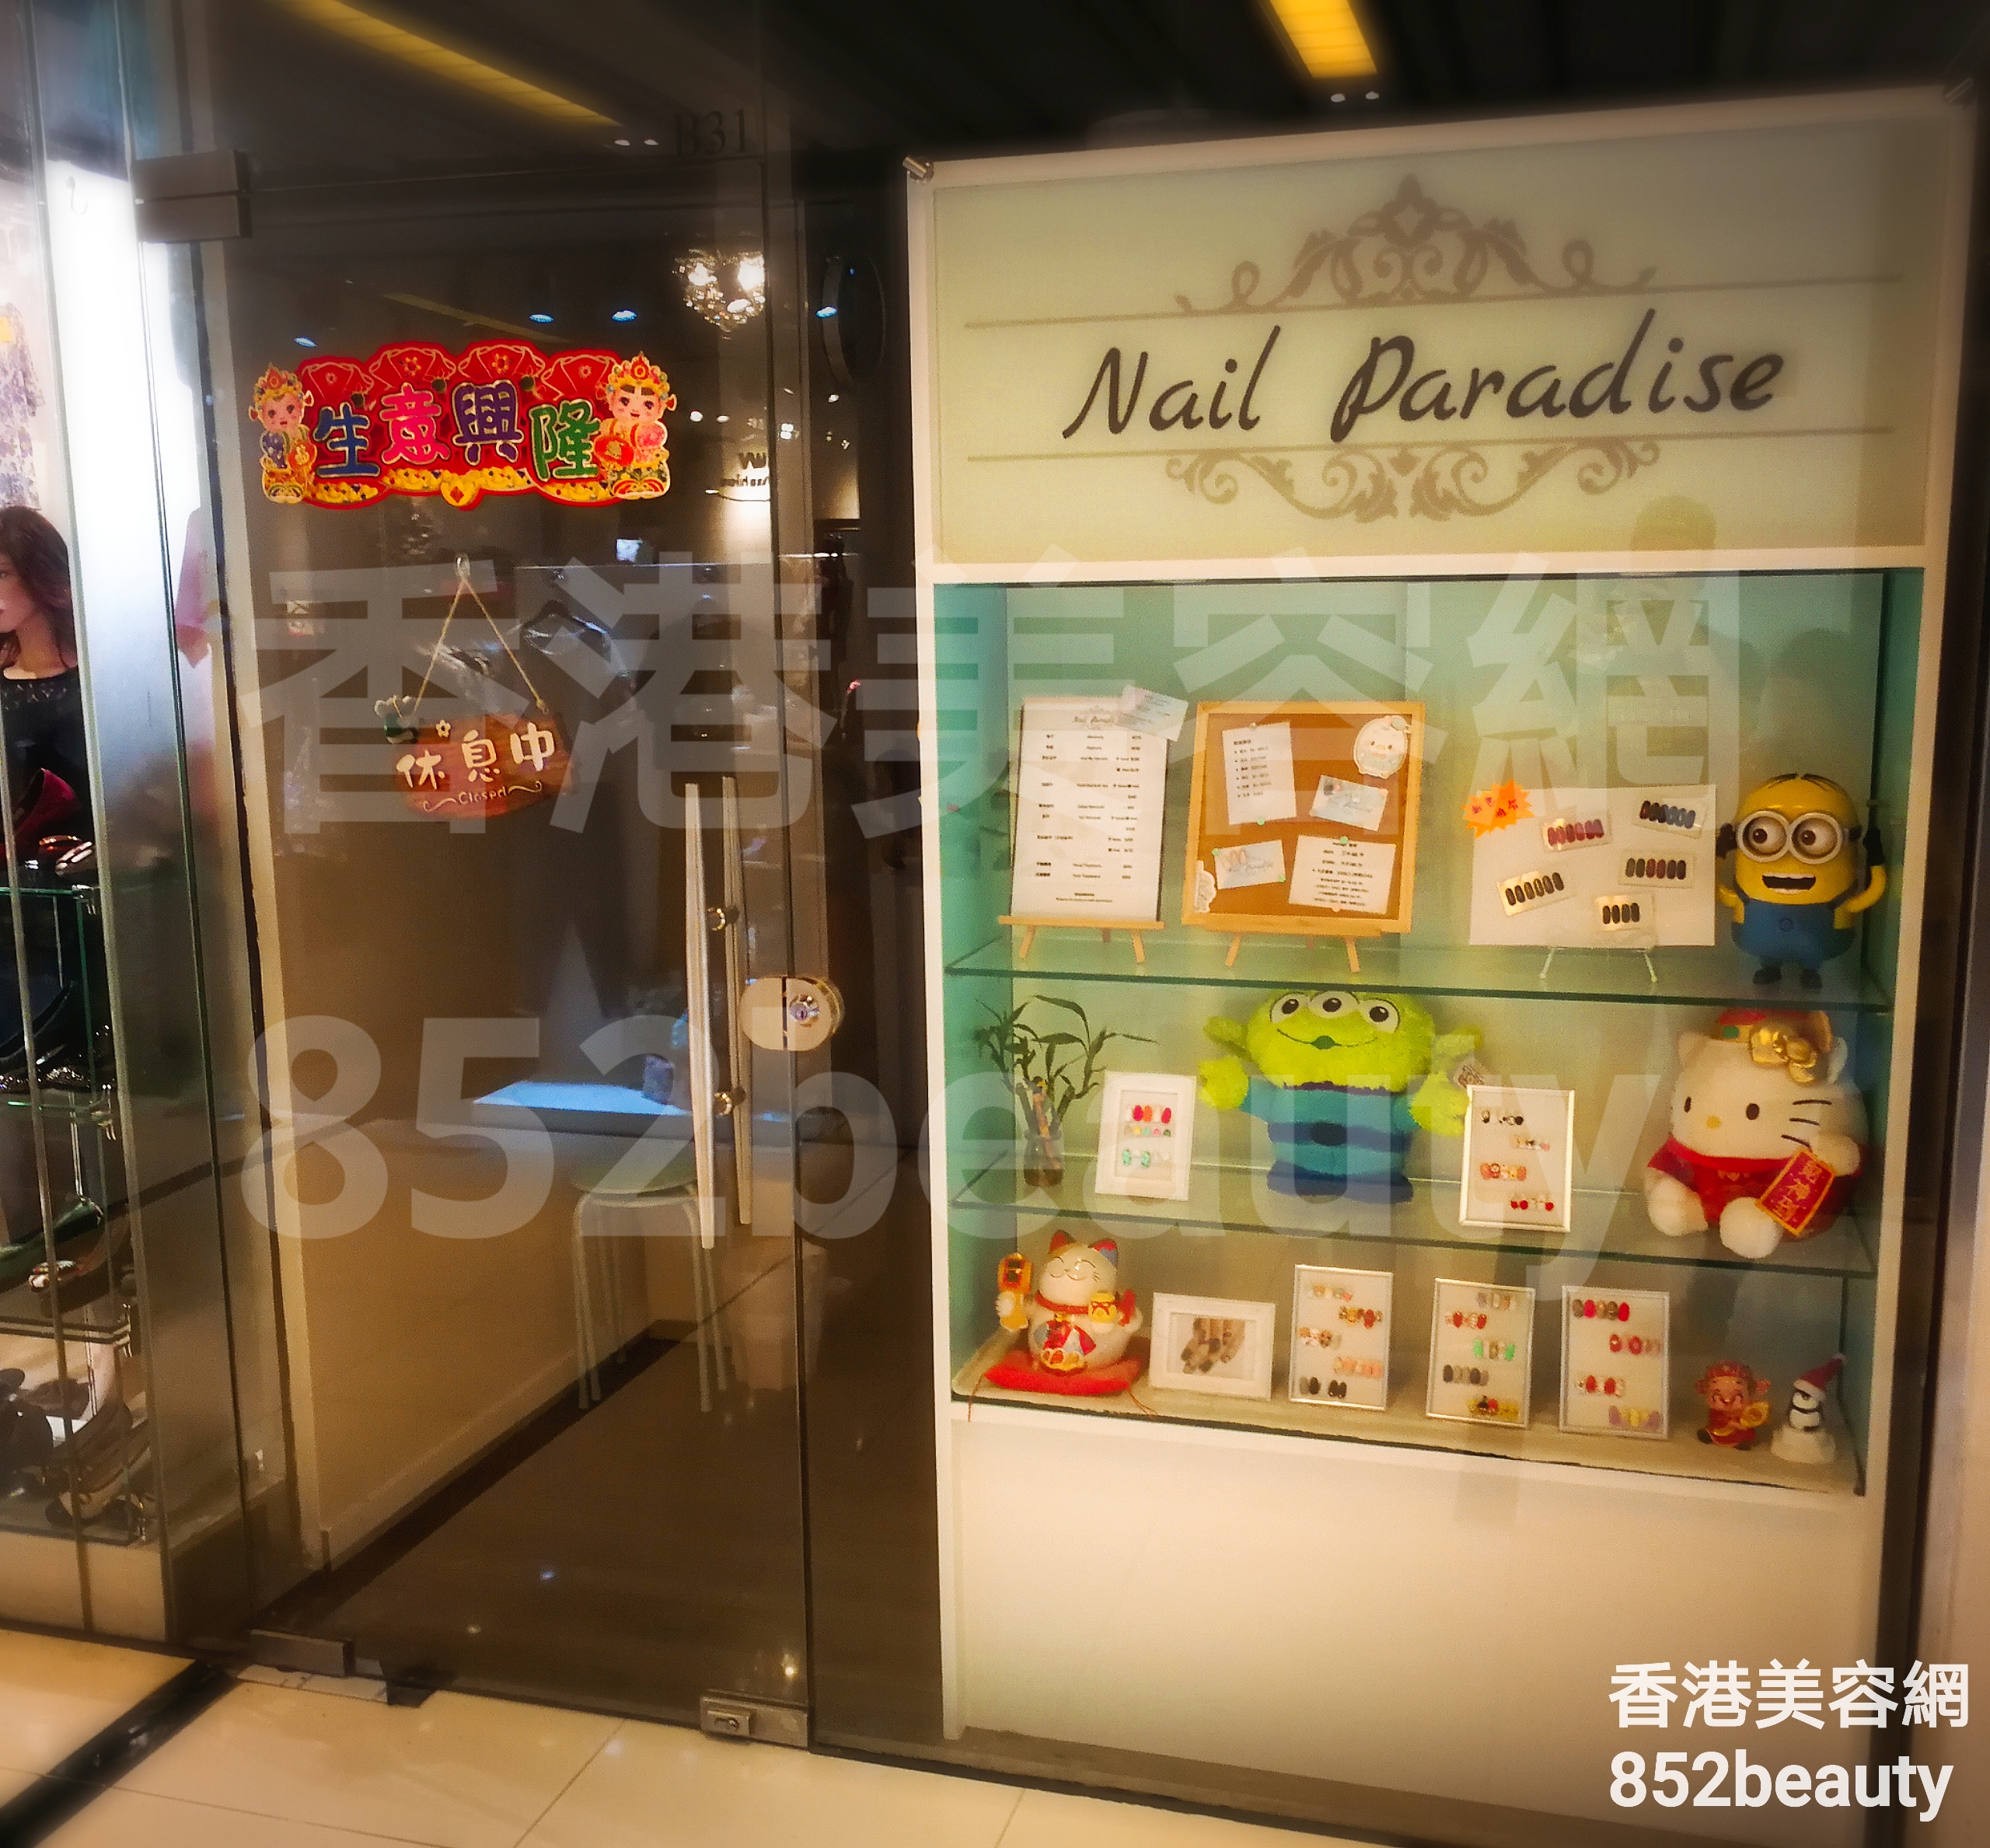 香港美容網 Hong Kong Beauty Salon 美容院 / 美容師: Nail Paradise